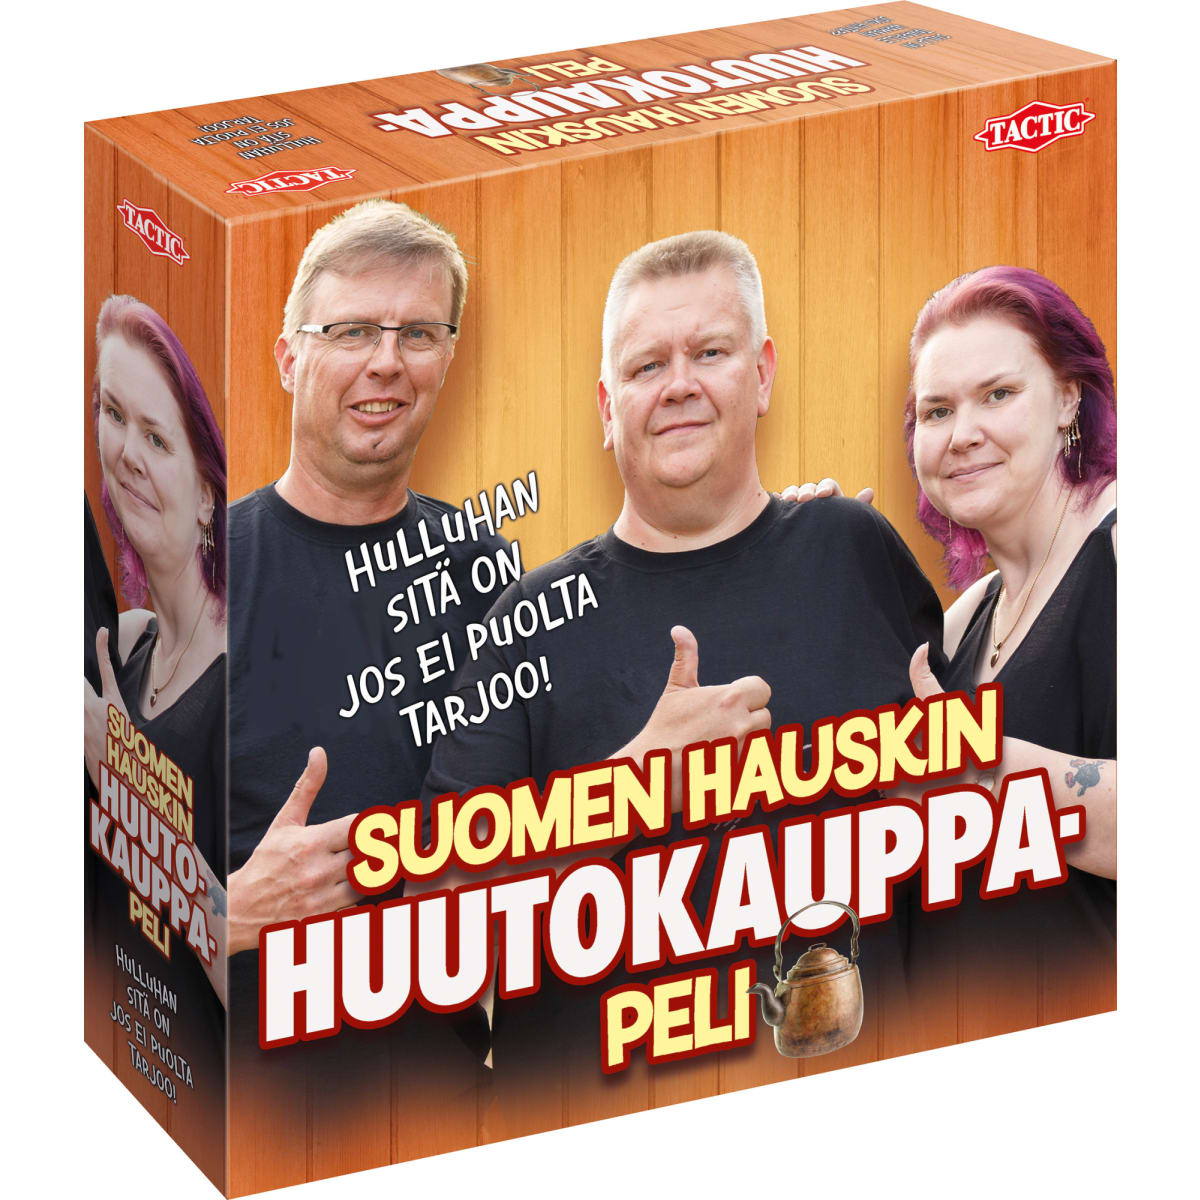 Tactic Suomen hauskin huutokauppapeli  verkkokauppa